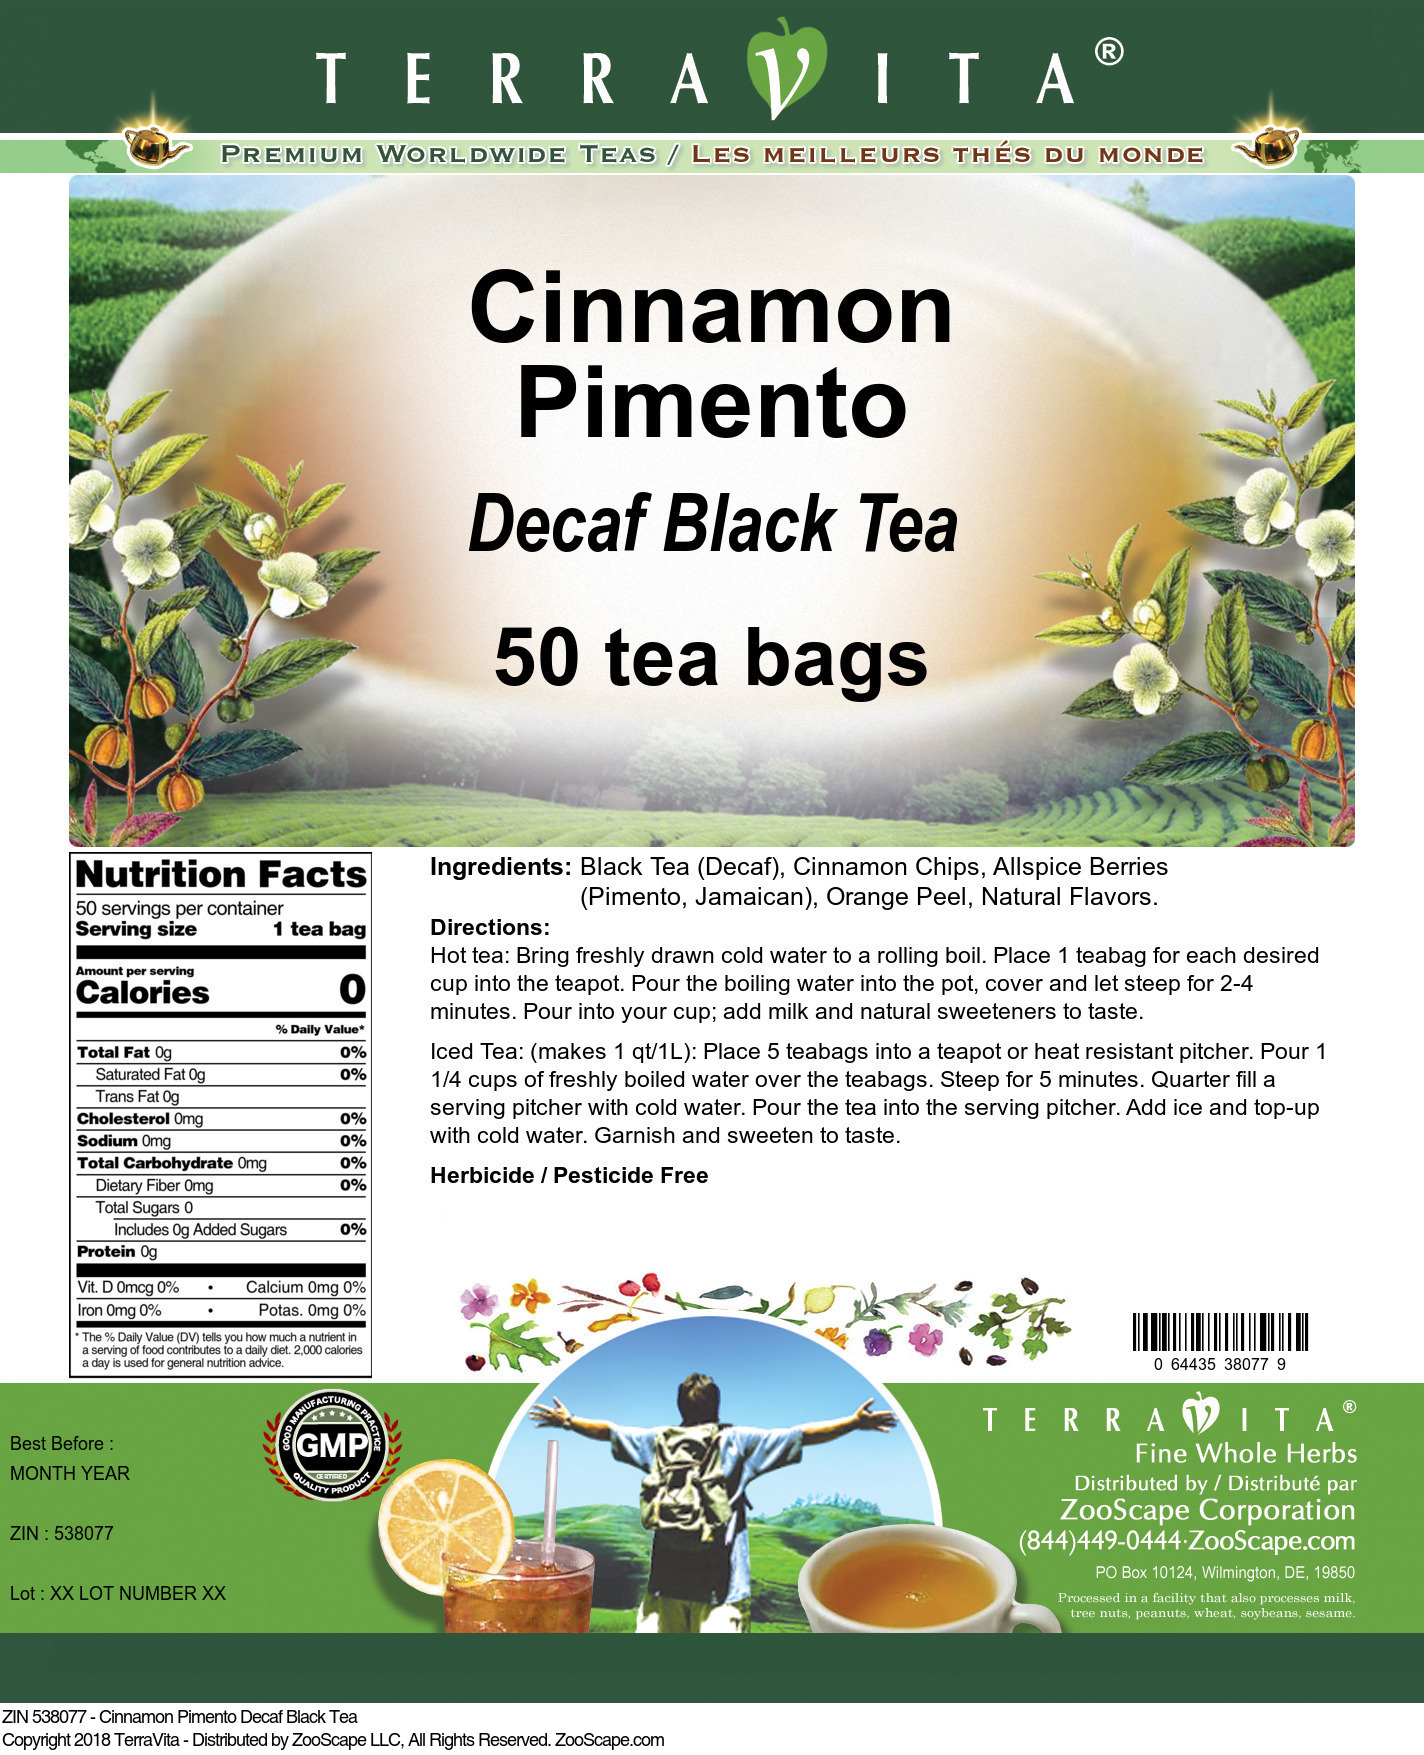 Cinnamon Pimento Decaf Black Tea - Label